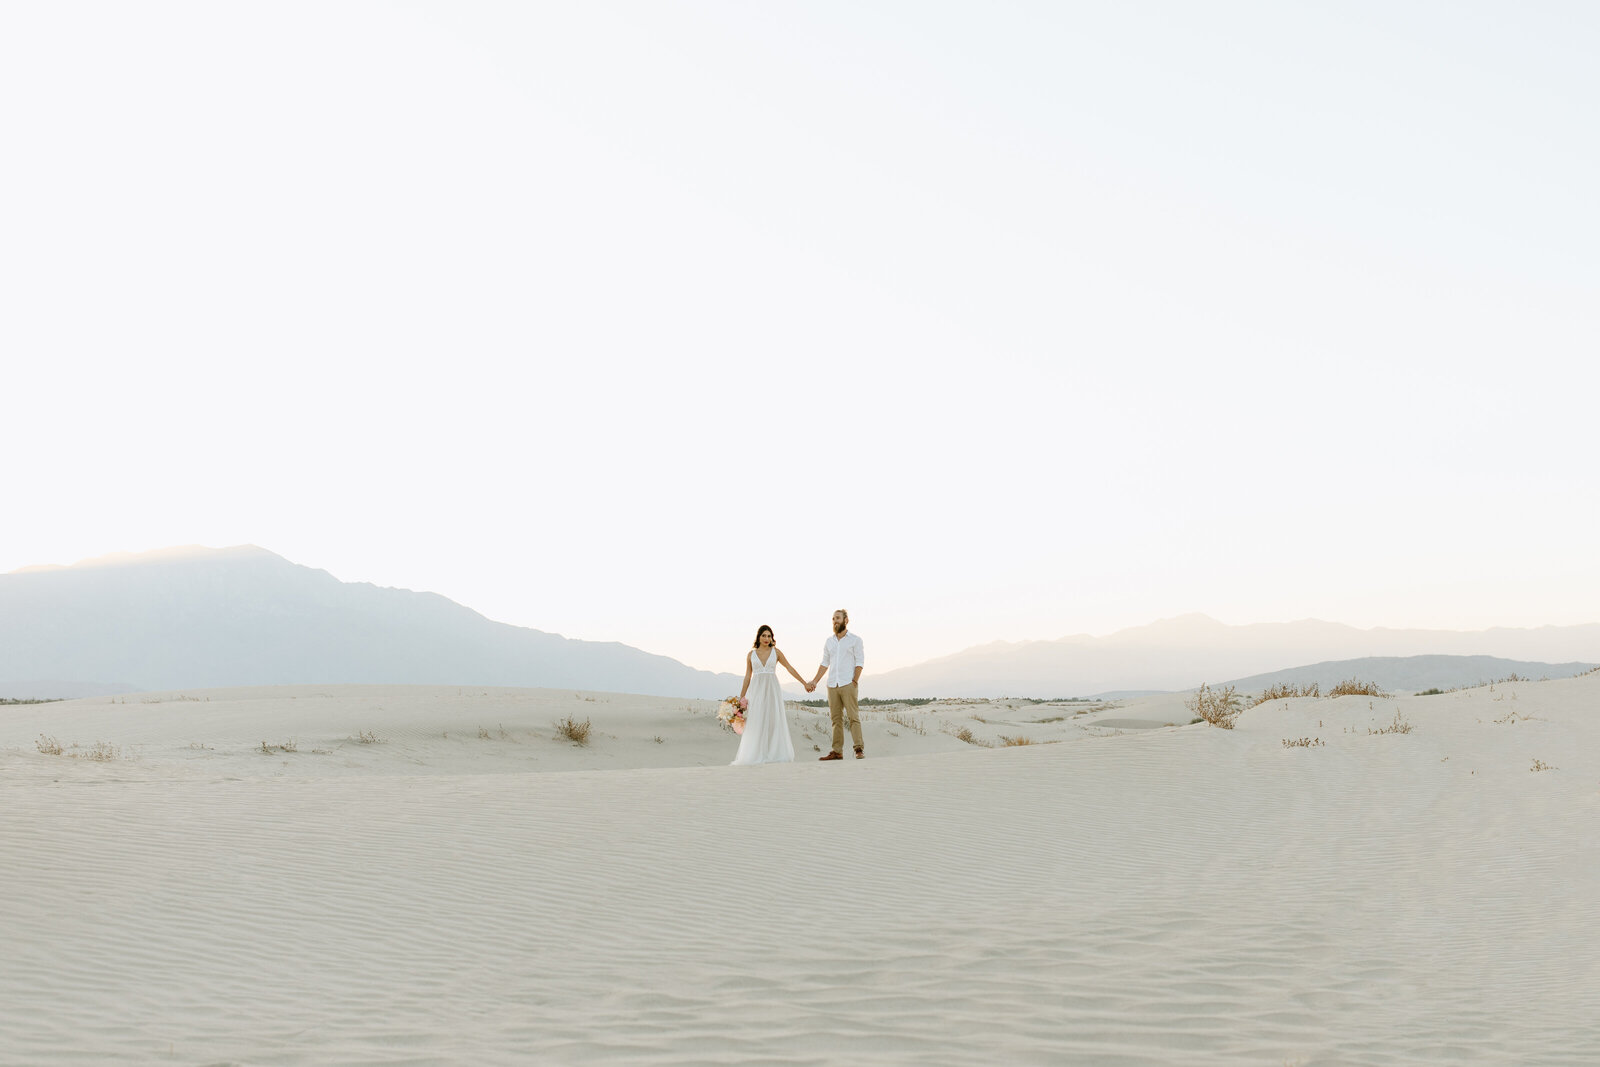 Leandra & Austin - Boho Desert Styled Elopement - Tess Laureen Photography @tesslaureen - 0734